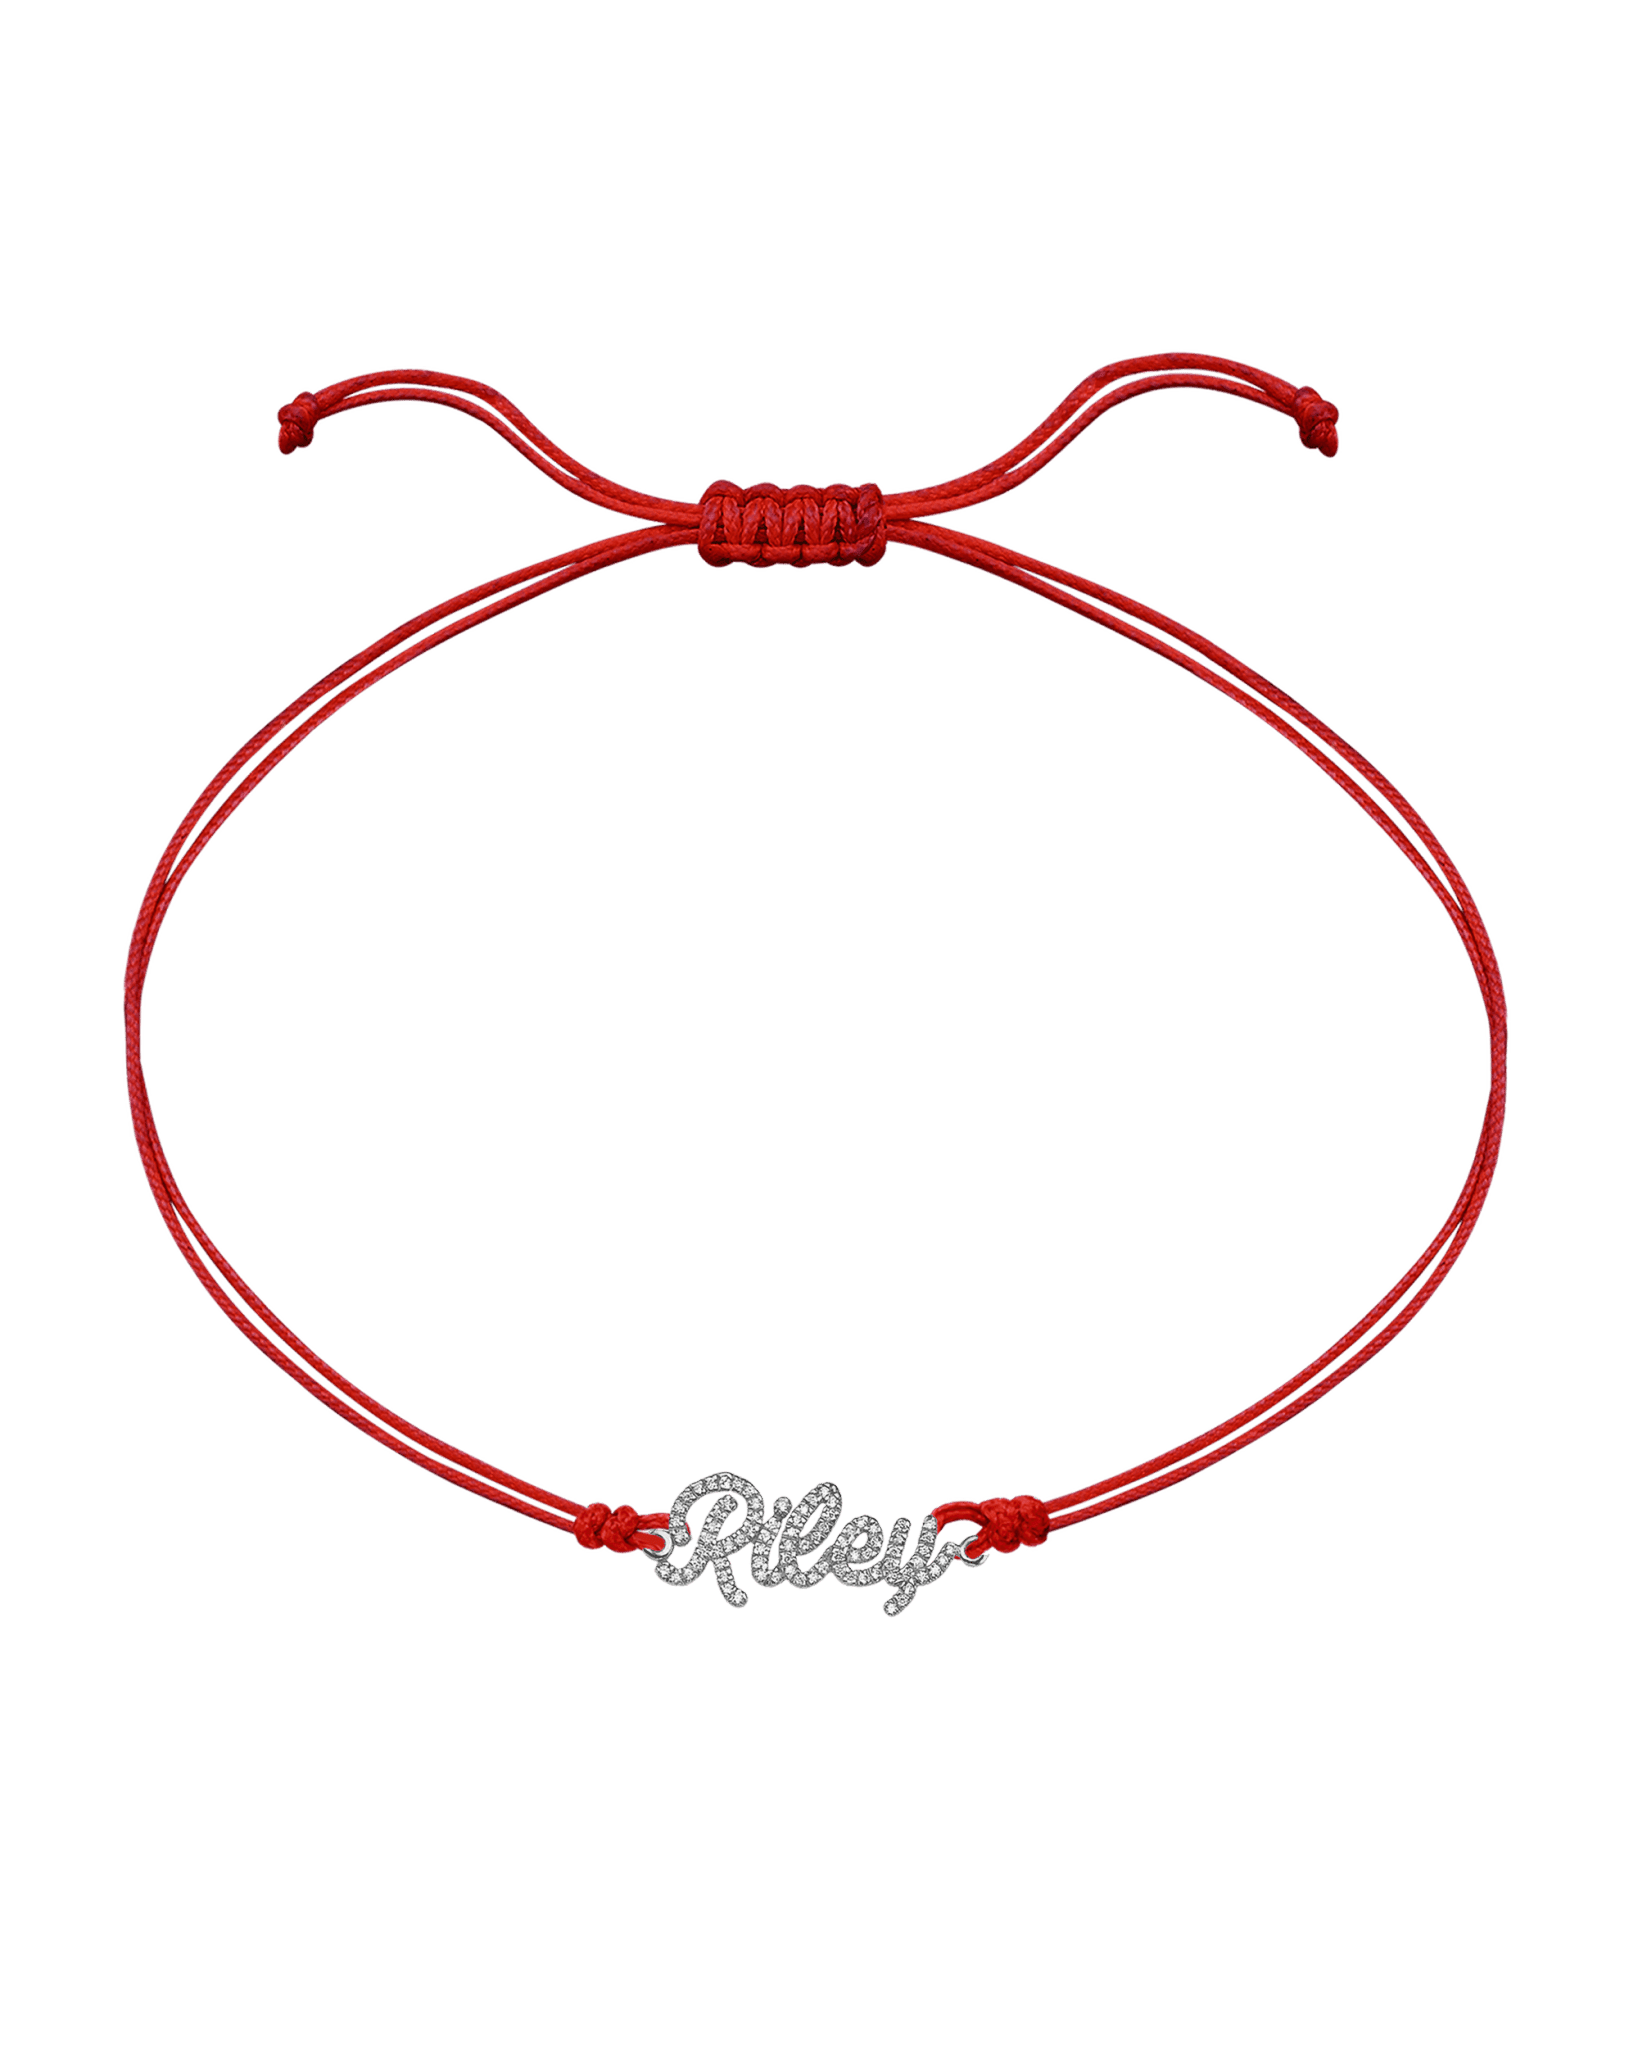 Paved Name Plate String of Love - 14K White Gold Bracelet 14K Solid Gold Red 1 